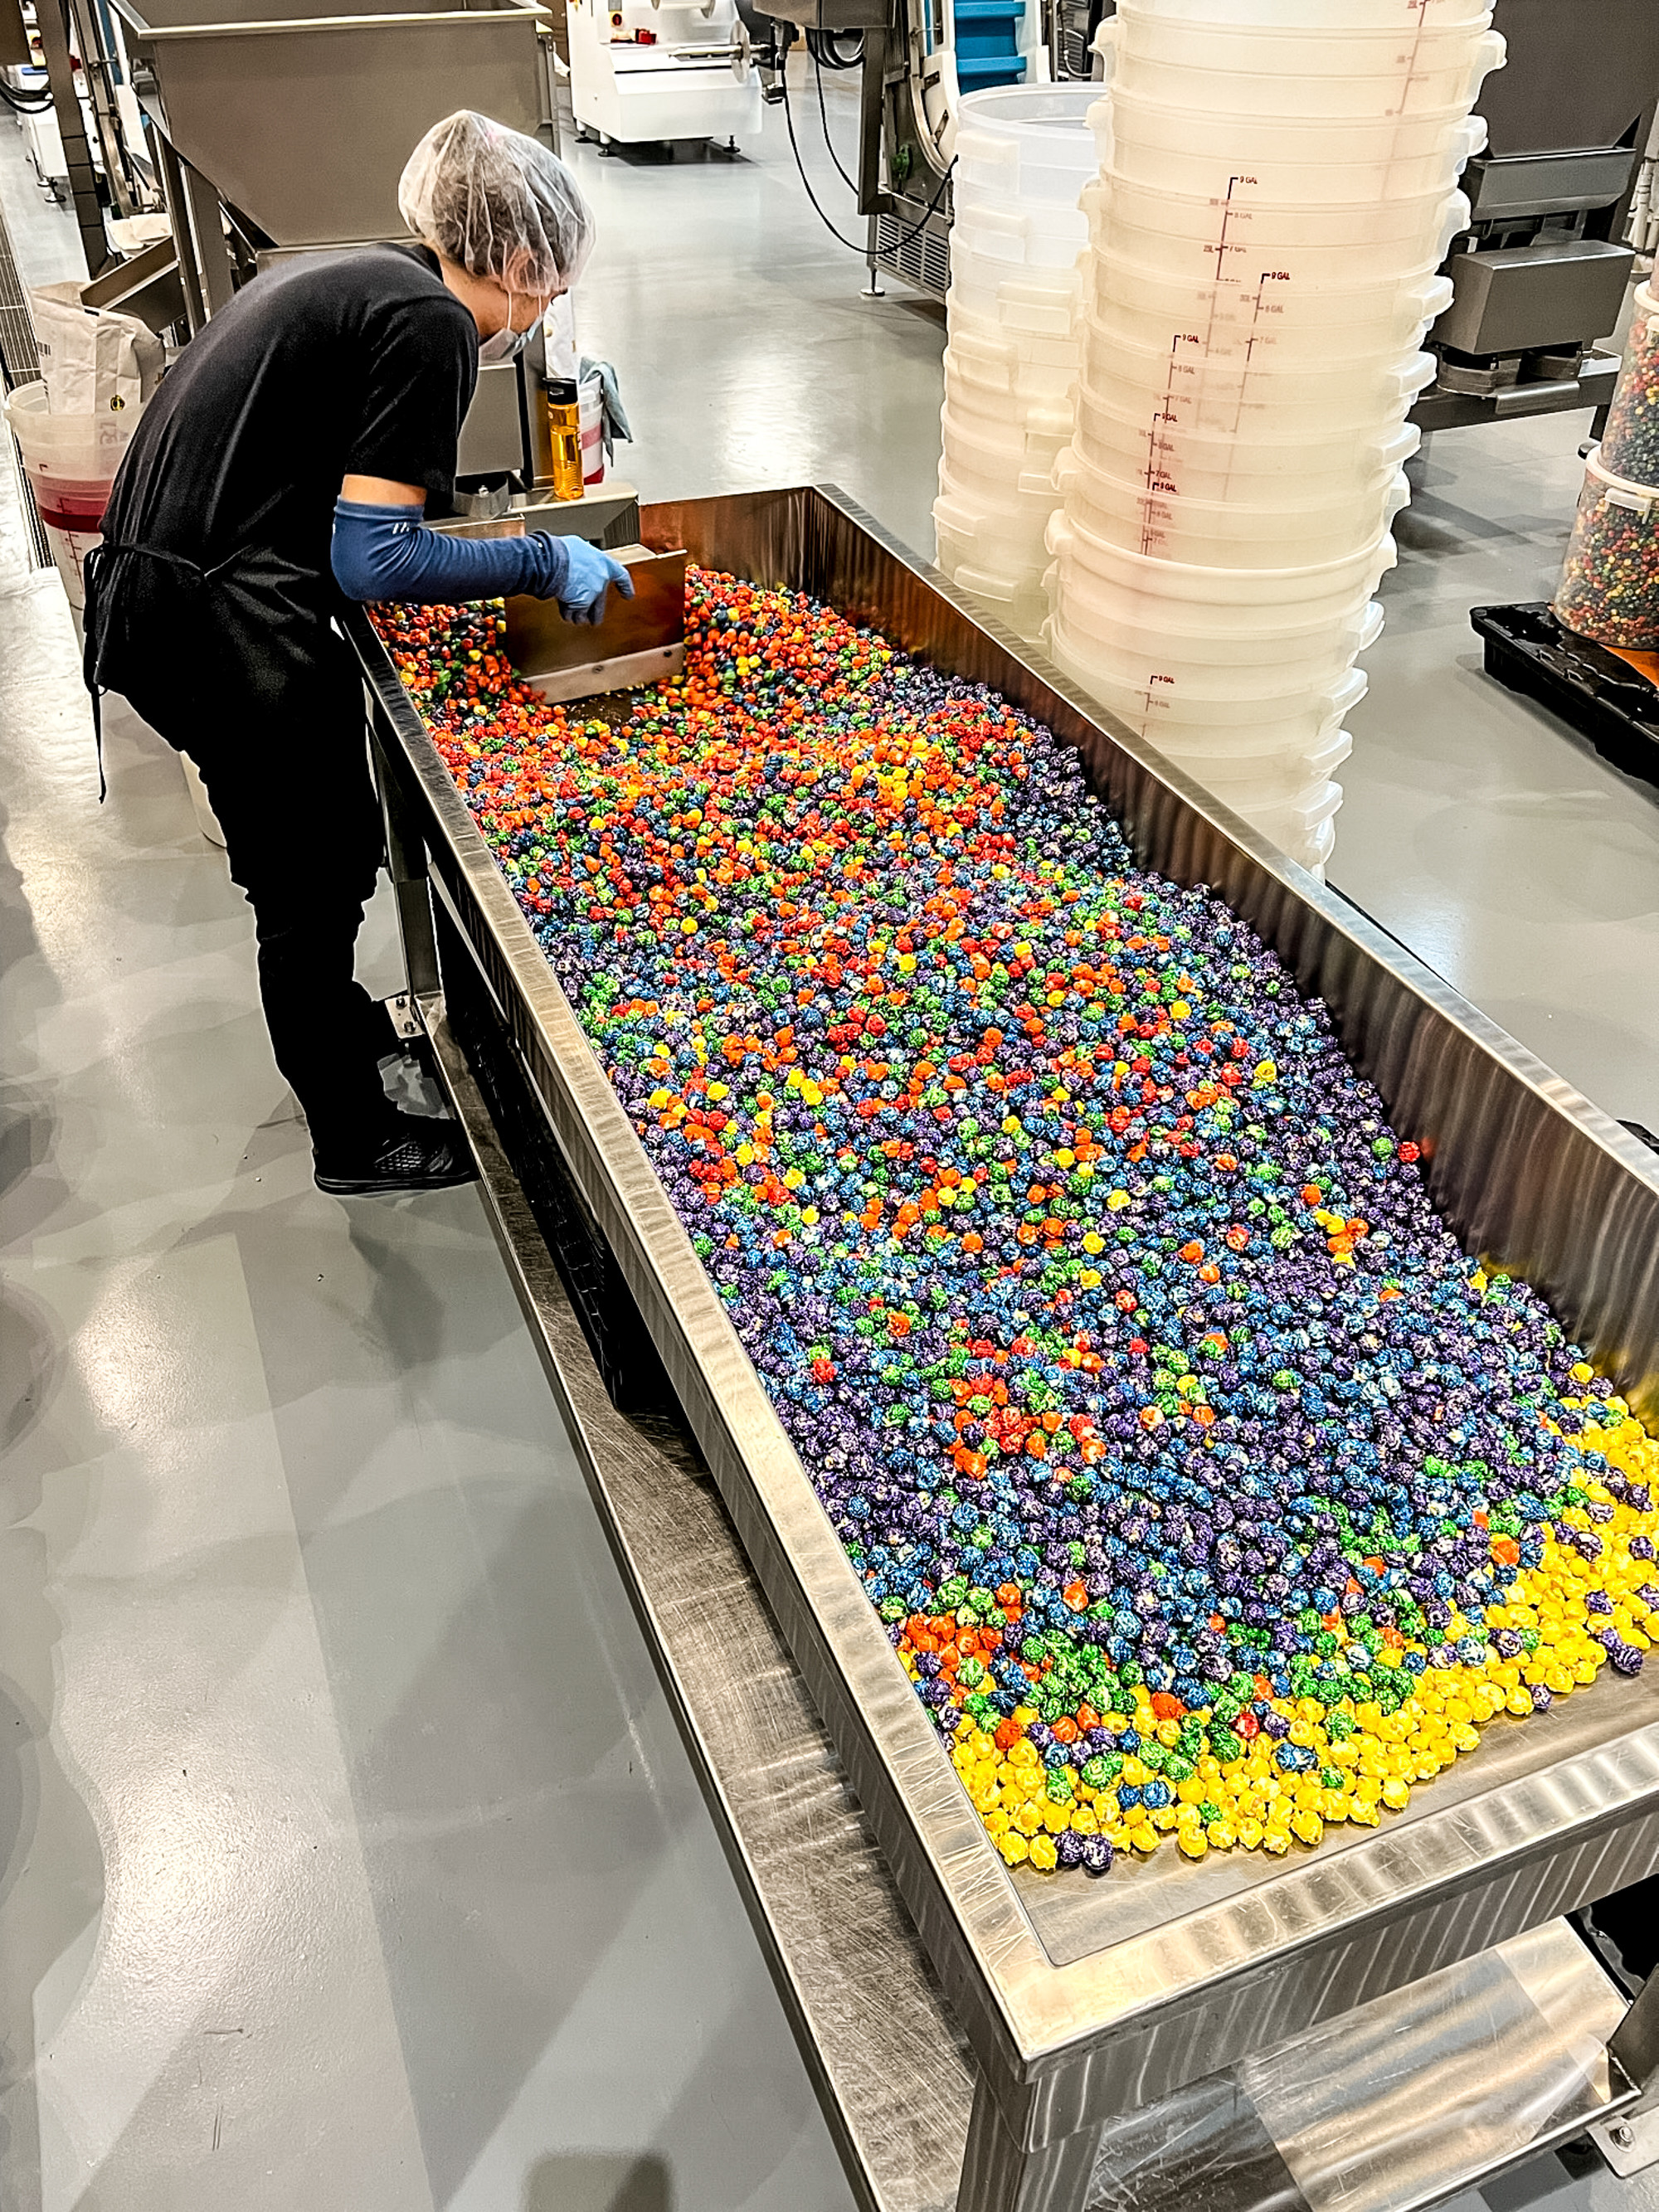 employee sorting multicolored popcorn